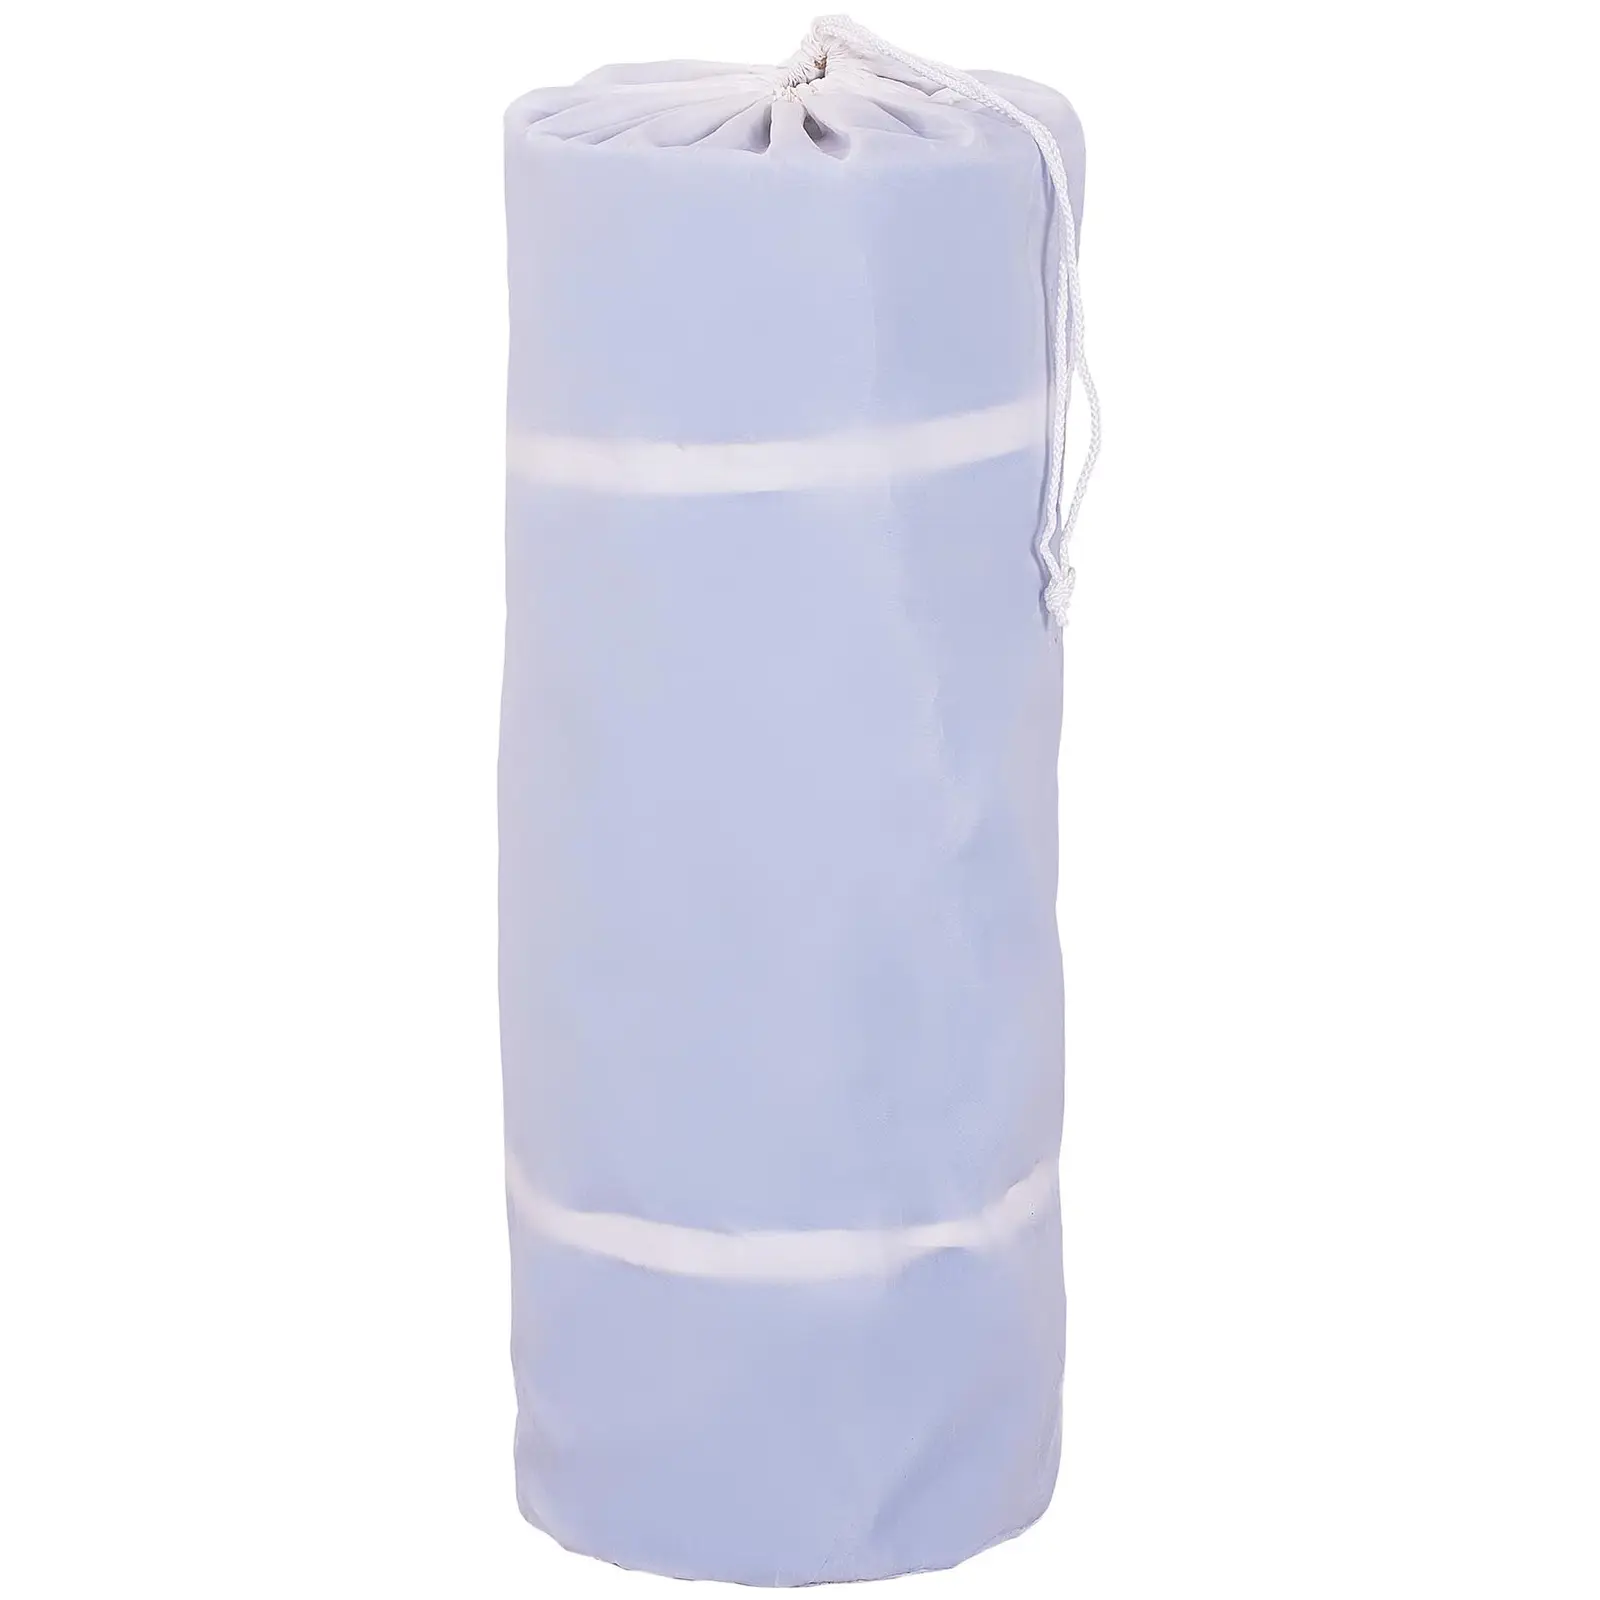 Aufblasbare Turnmatte - 400 x 100 x 20 cm - 200 kg - blau/weiß